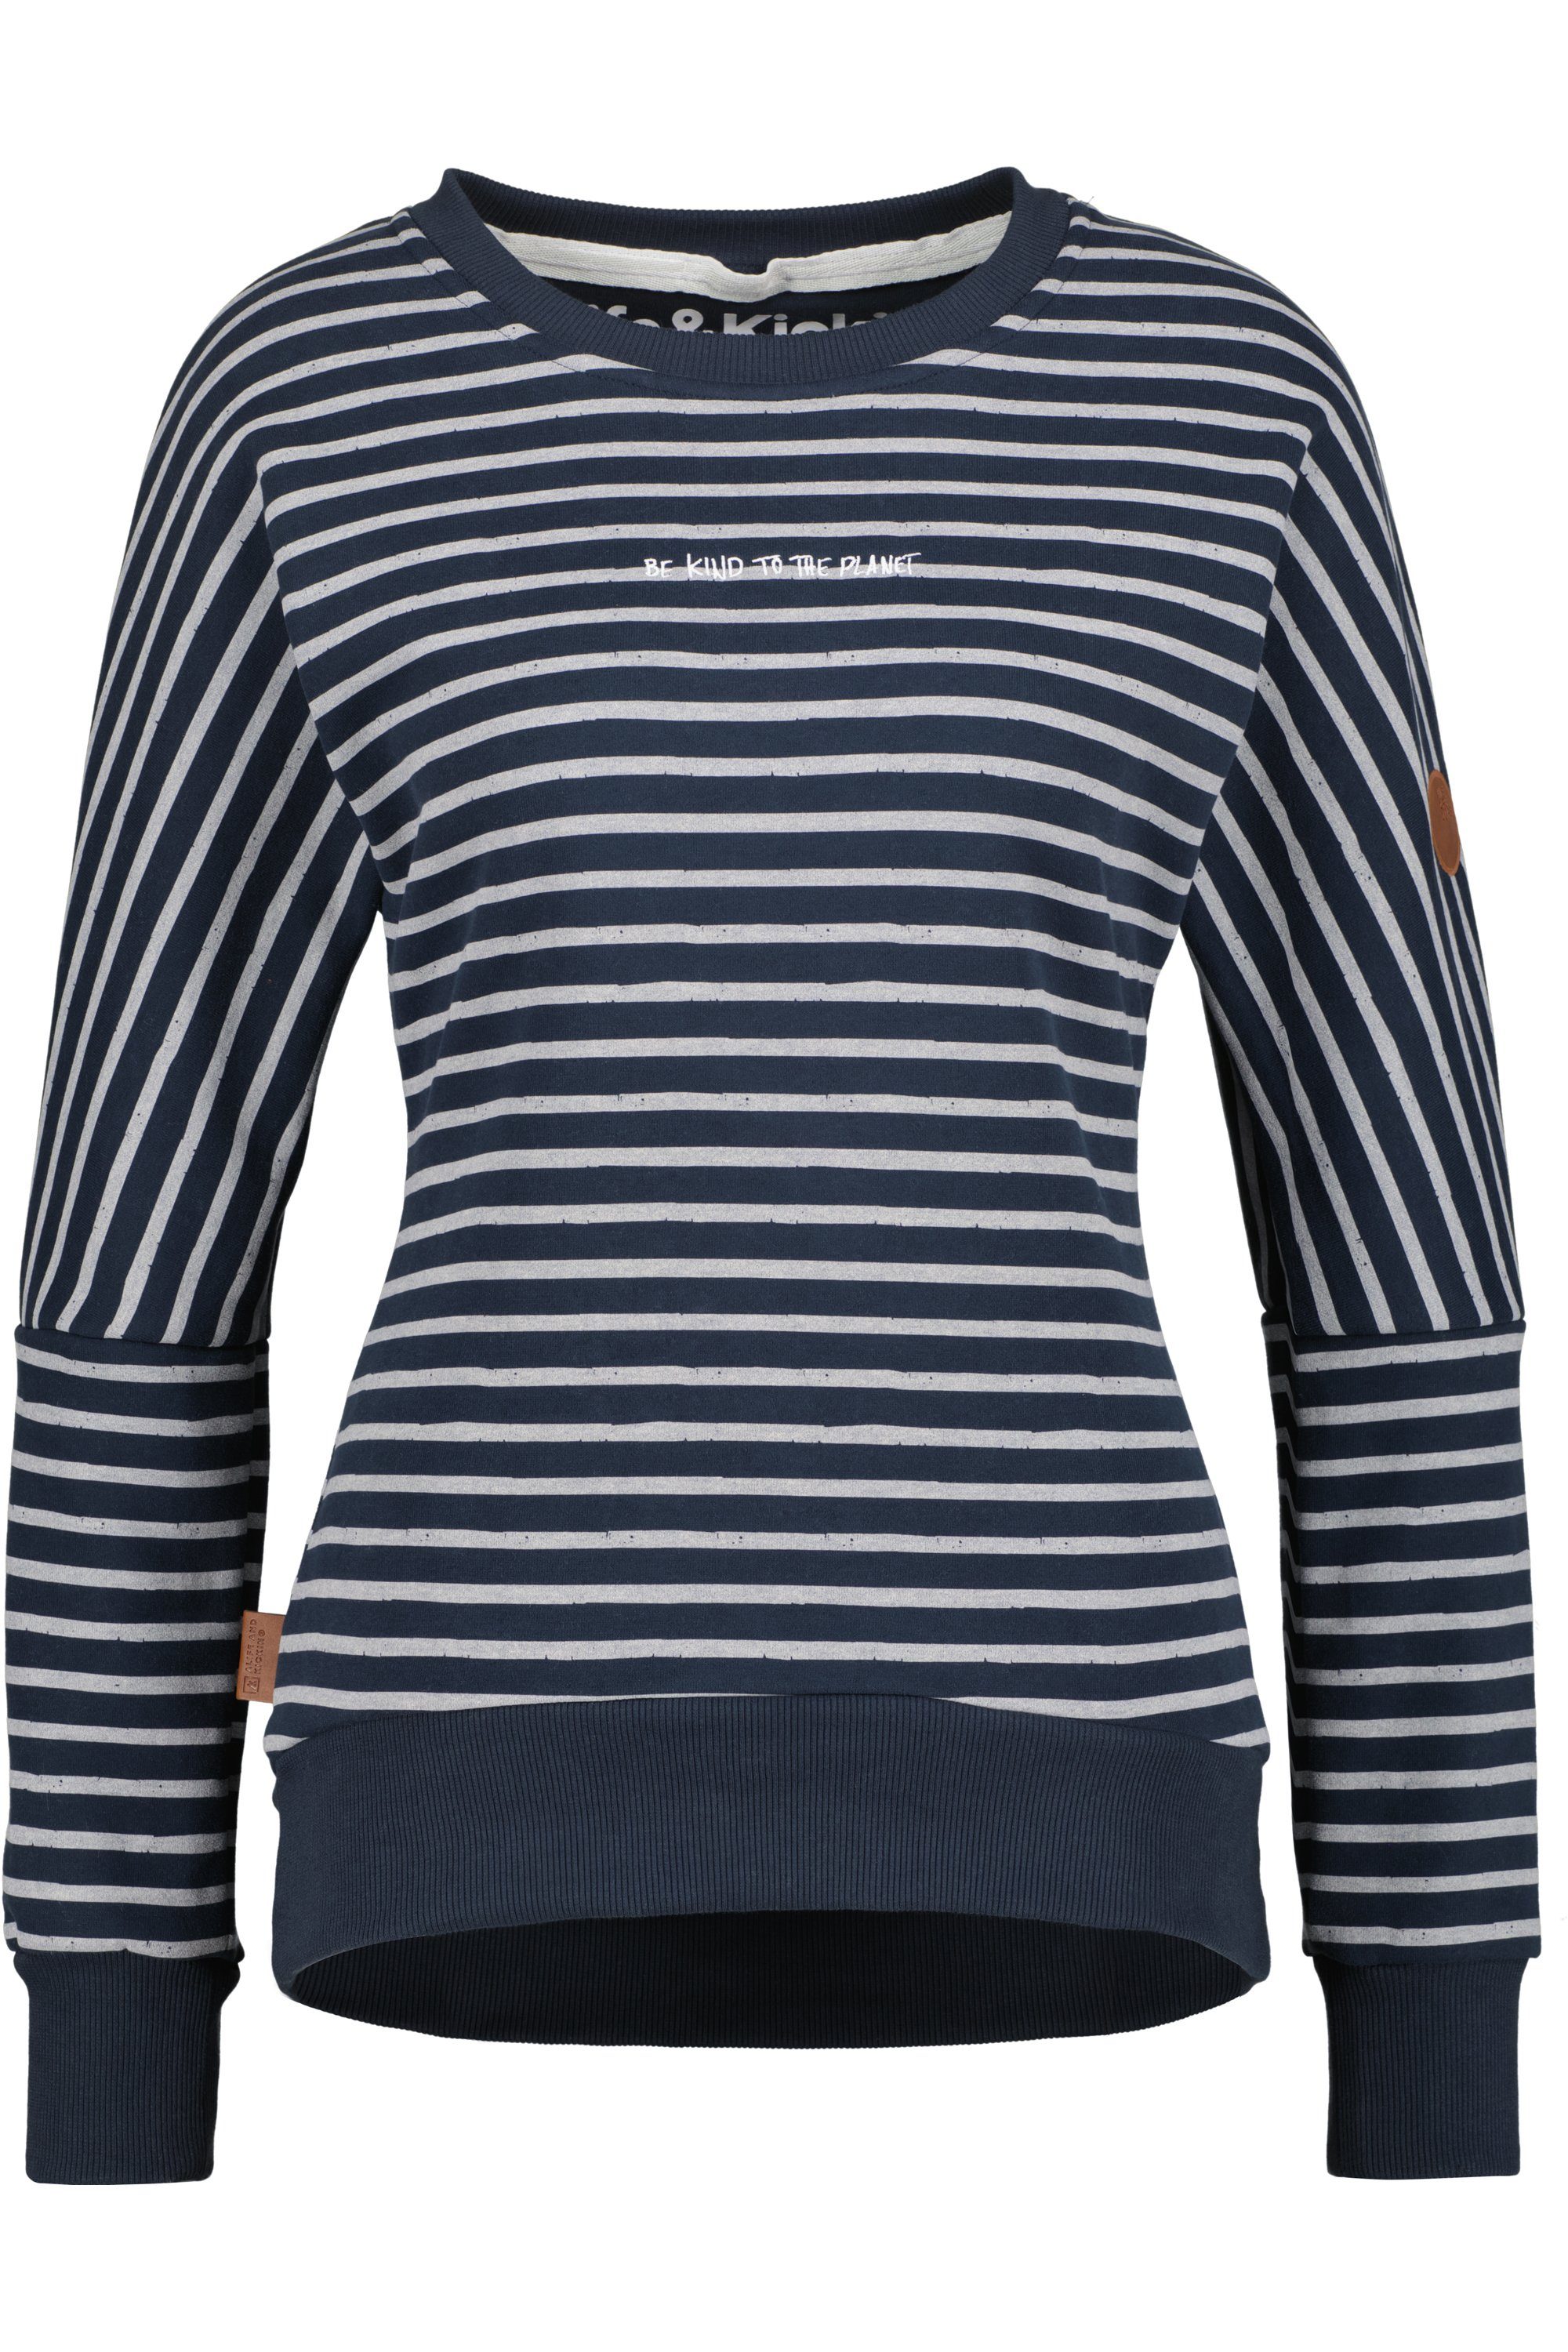 Alife & Damen Sweat Sweatshirt marine Sweatshirt Kickin DarlaAK